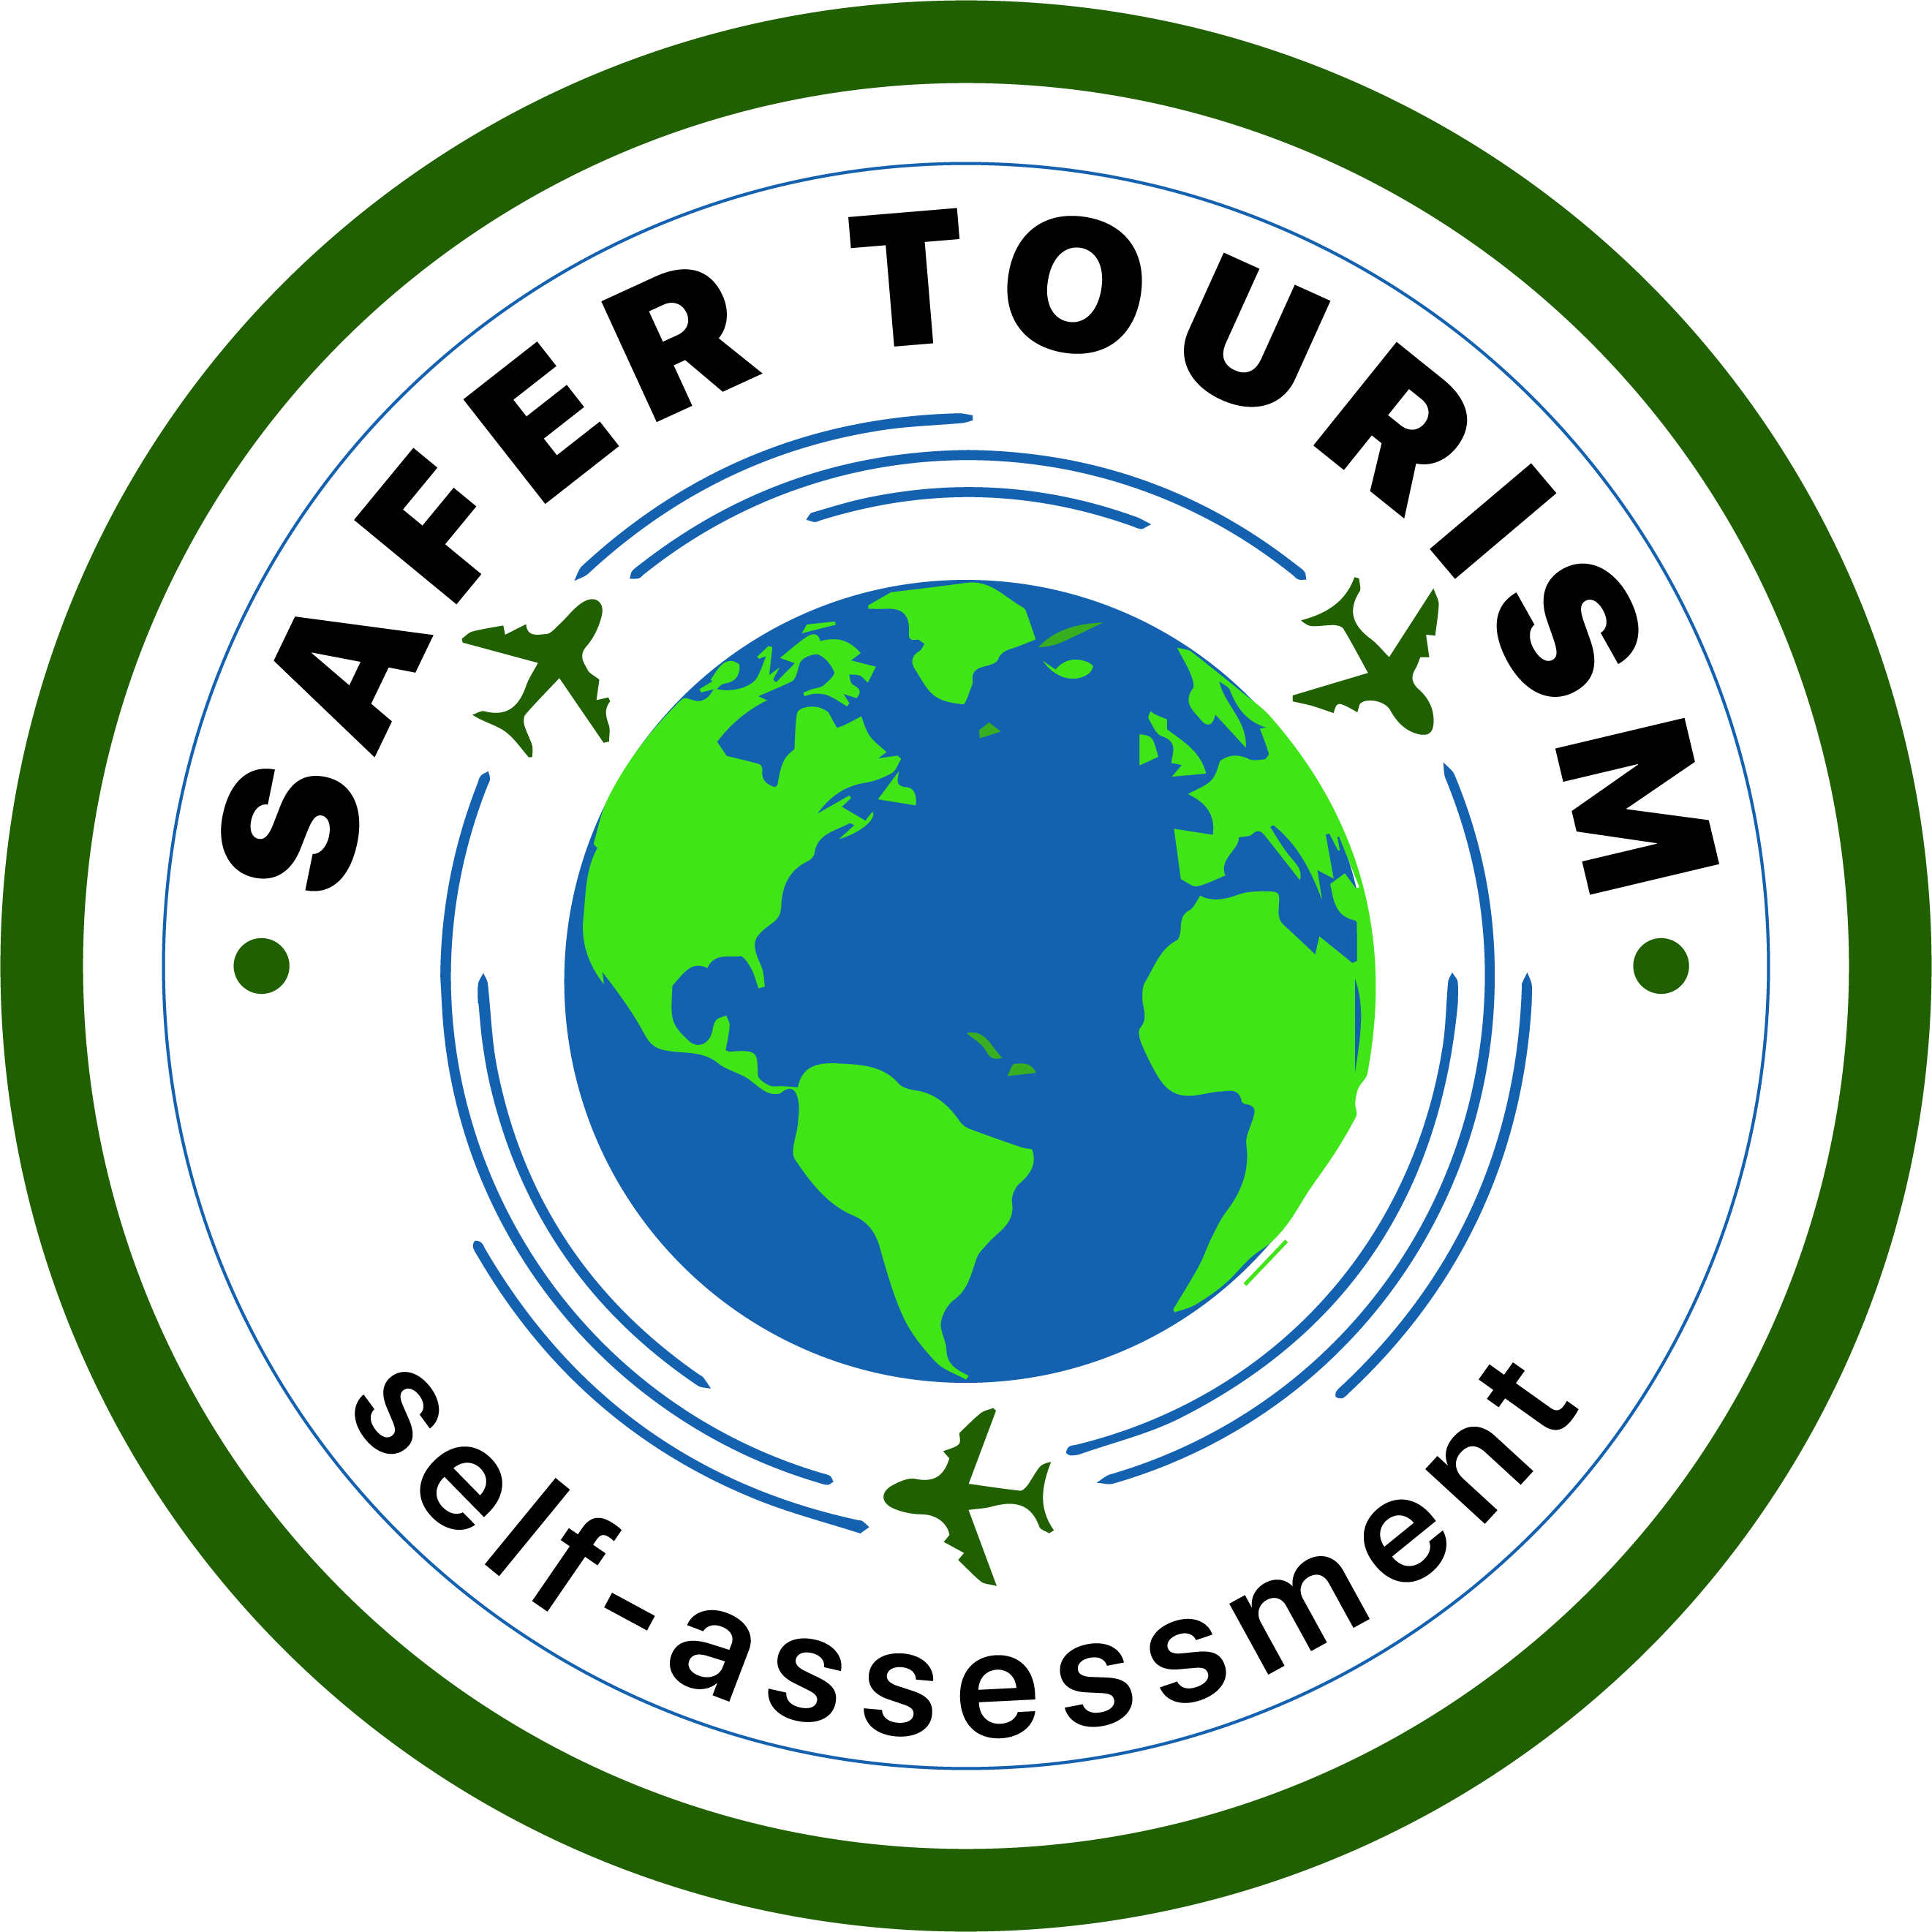 safer-tourism